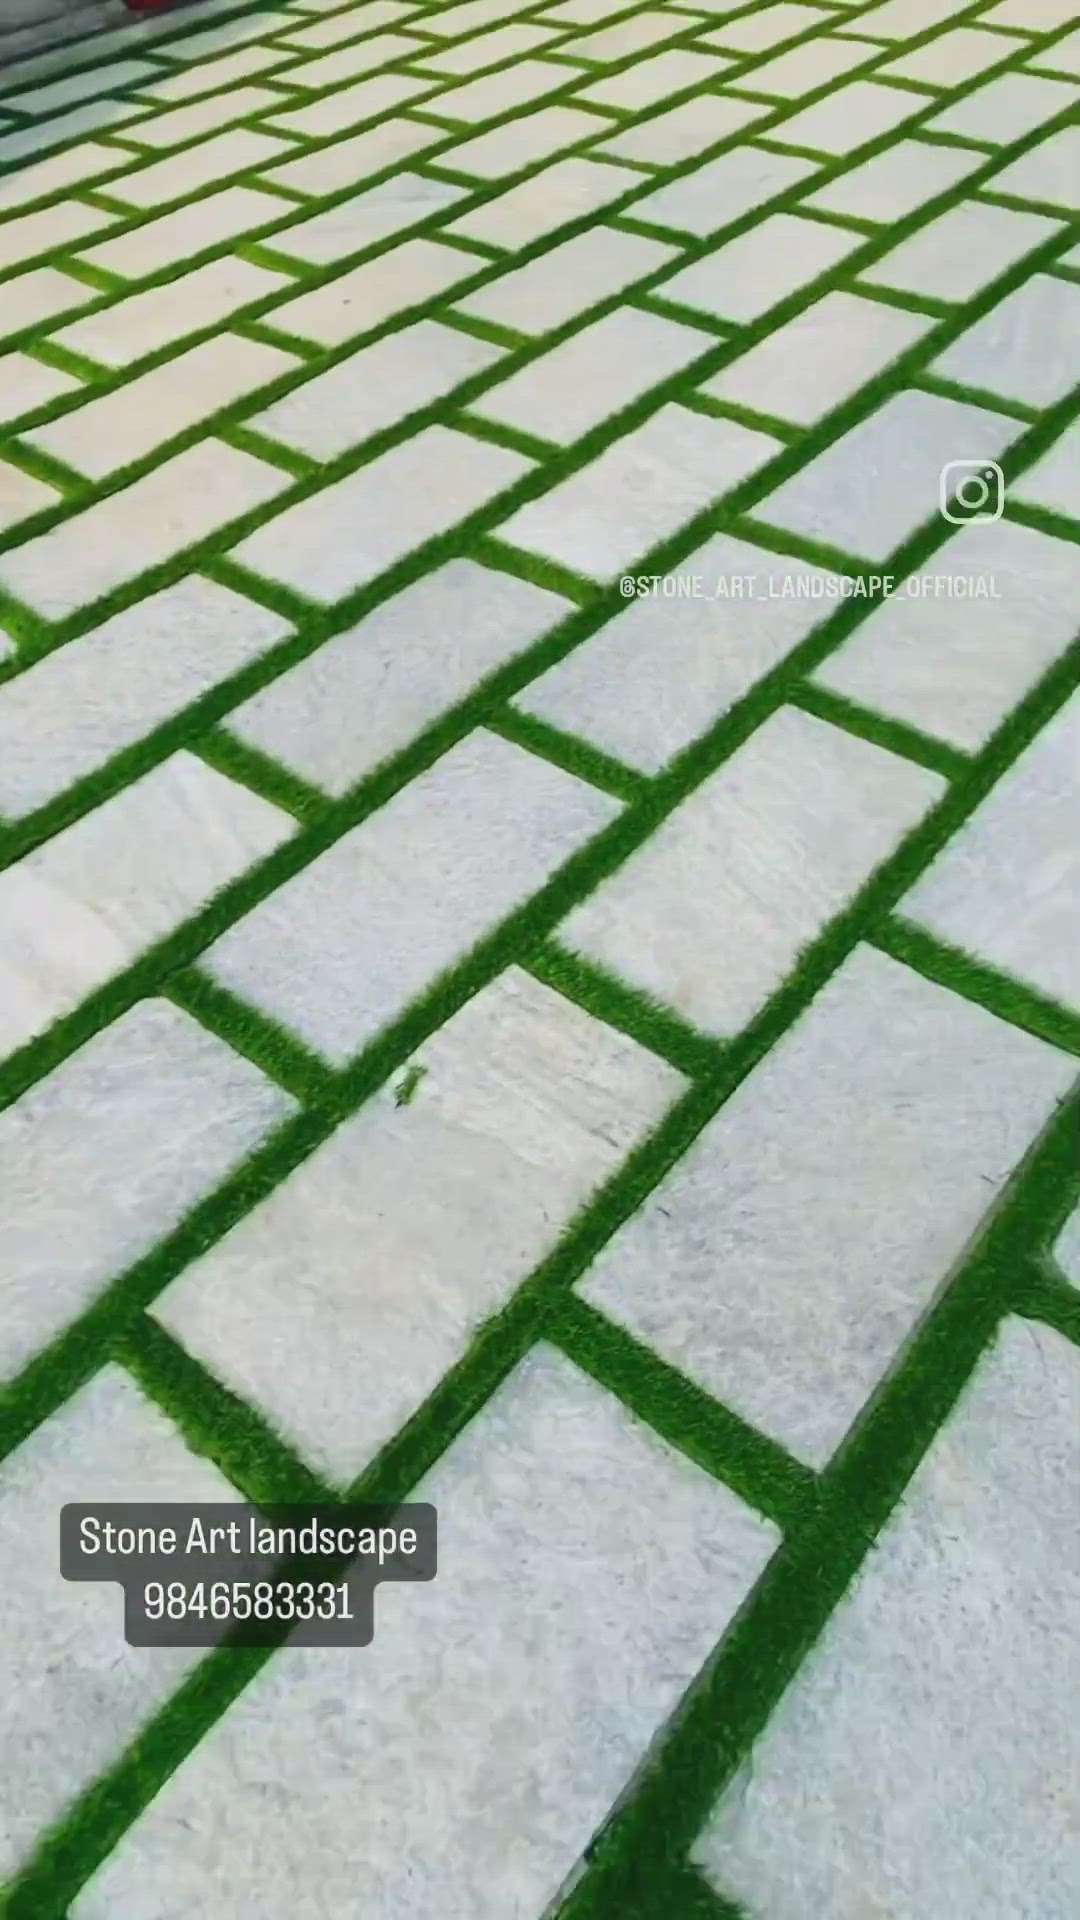 banglore stone with artificial grass.
location : Manarcadu, Kottayam
ph : 9846583331

 #BangaloreStone  #artificialgrass  #halfcut  #flamedstone  #pavingstone  #exteriordesigns  #Landscape  #LandscapeGarden